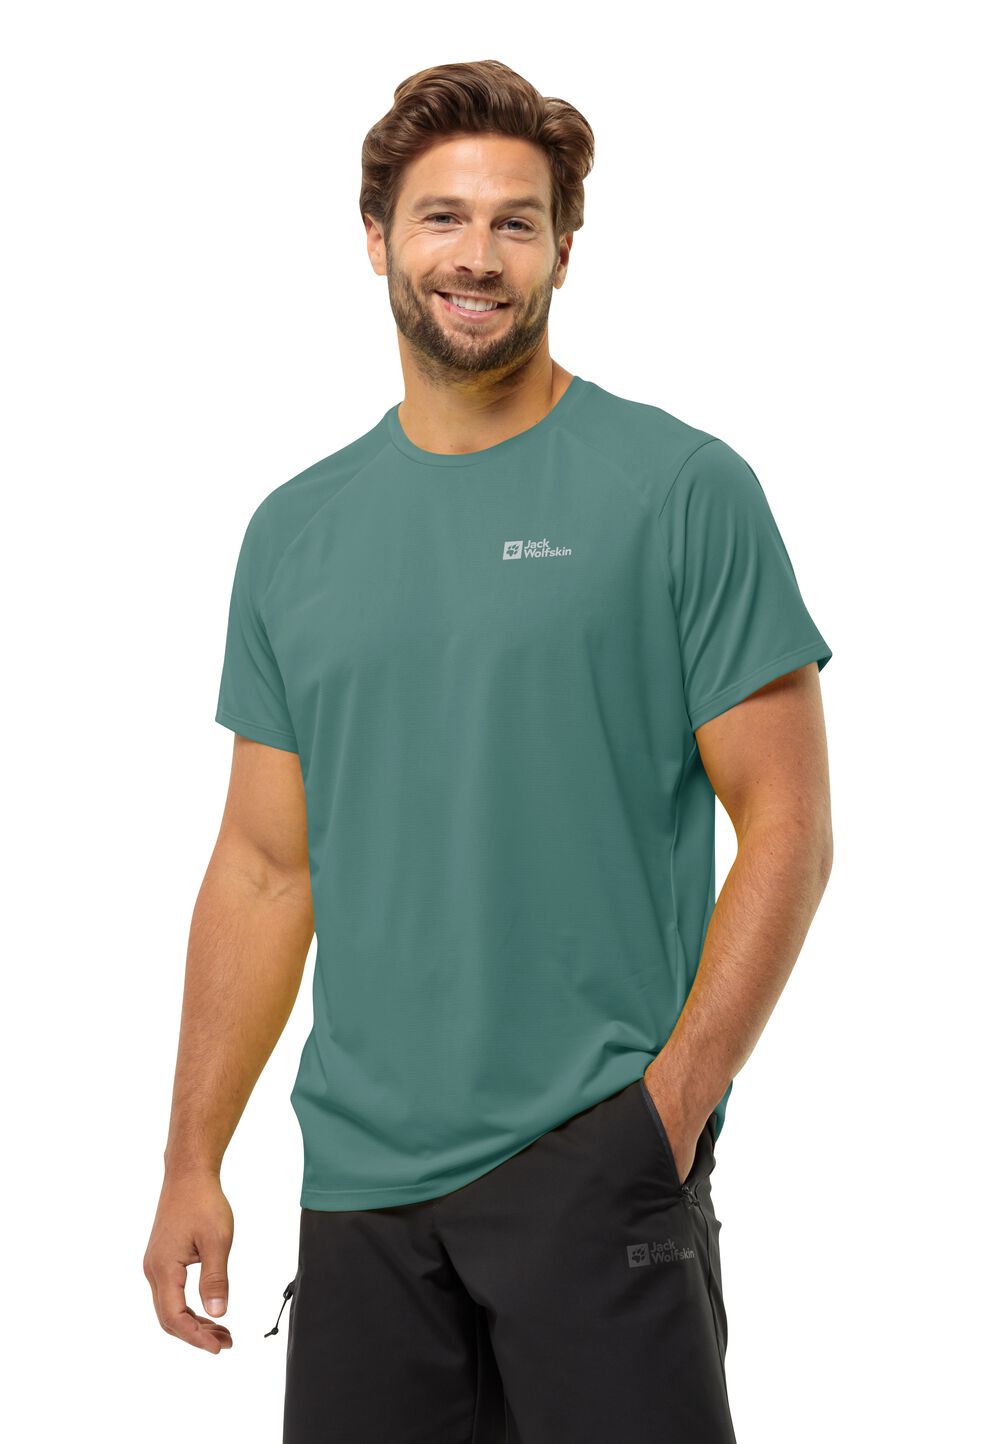 Jack Wolfskin Prelight Trail T-Shirt Men Functioneel shirt Heren L jade green jade green